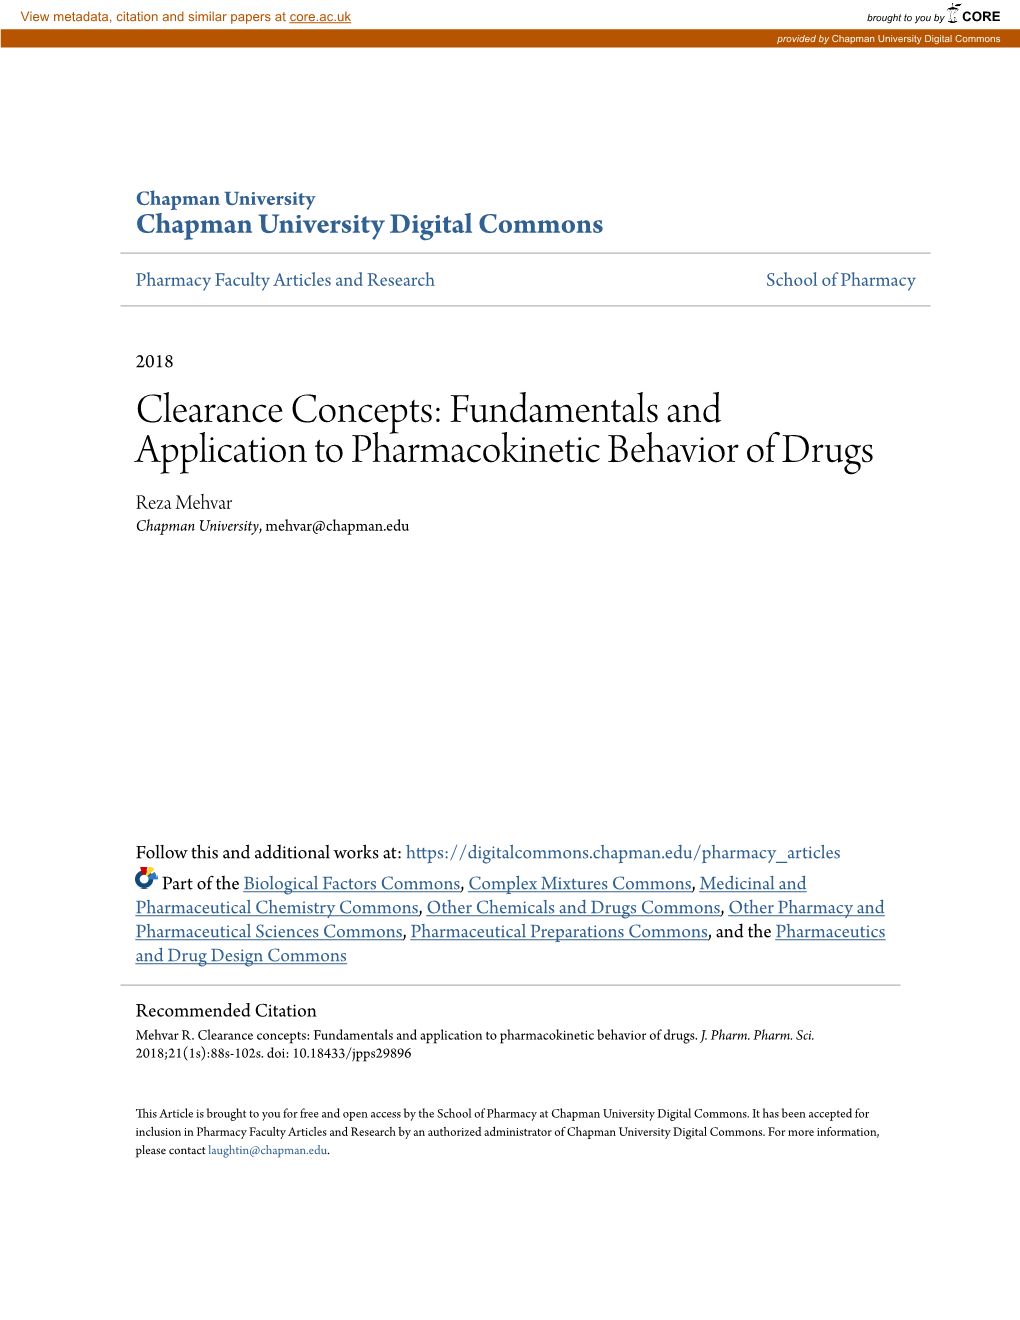 Clearance Concepts: Fundamentals and Application to Pharmacokinetic Behavior of Drugs Reza Mehvar Chapman University, Mehvar@Chapman.Edu